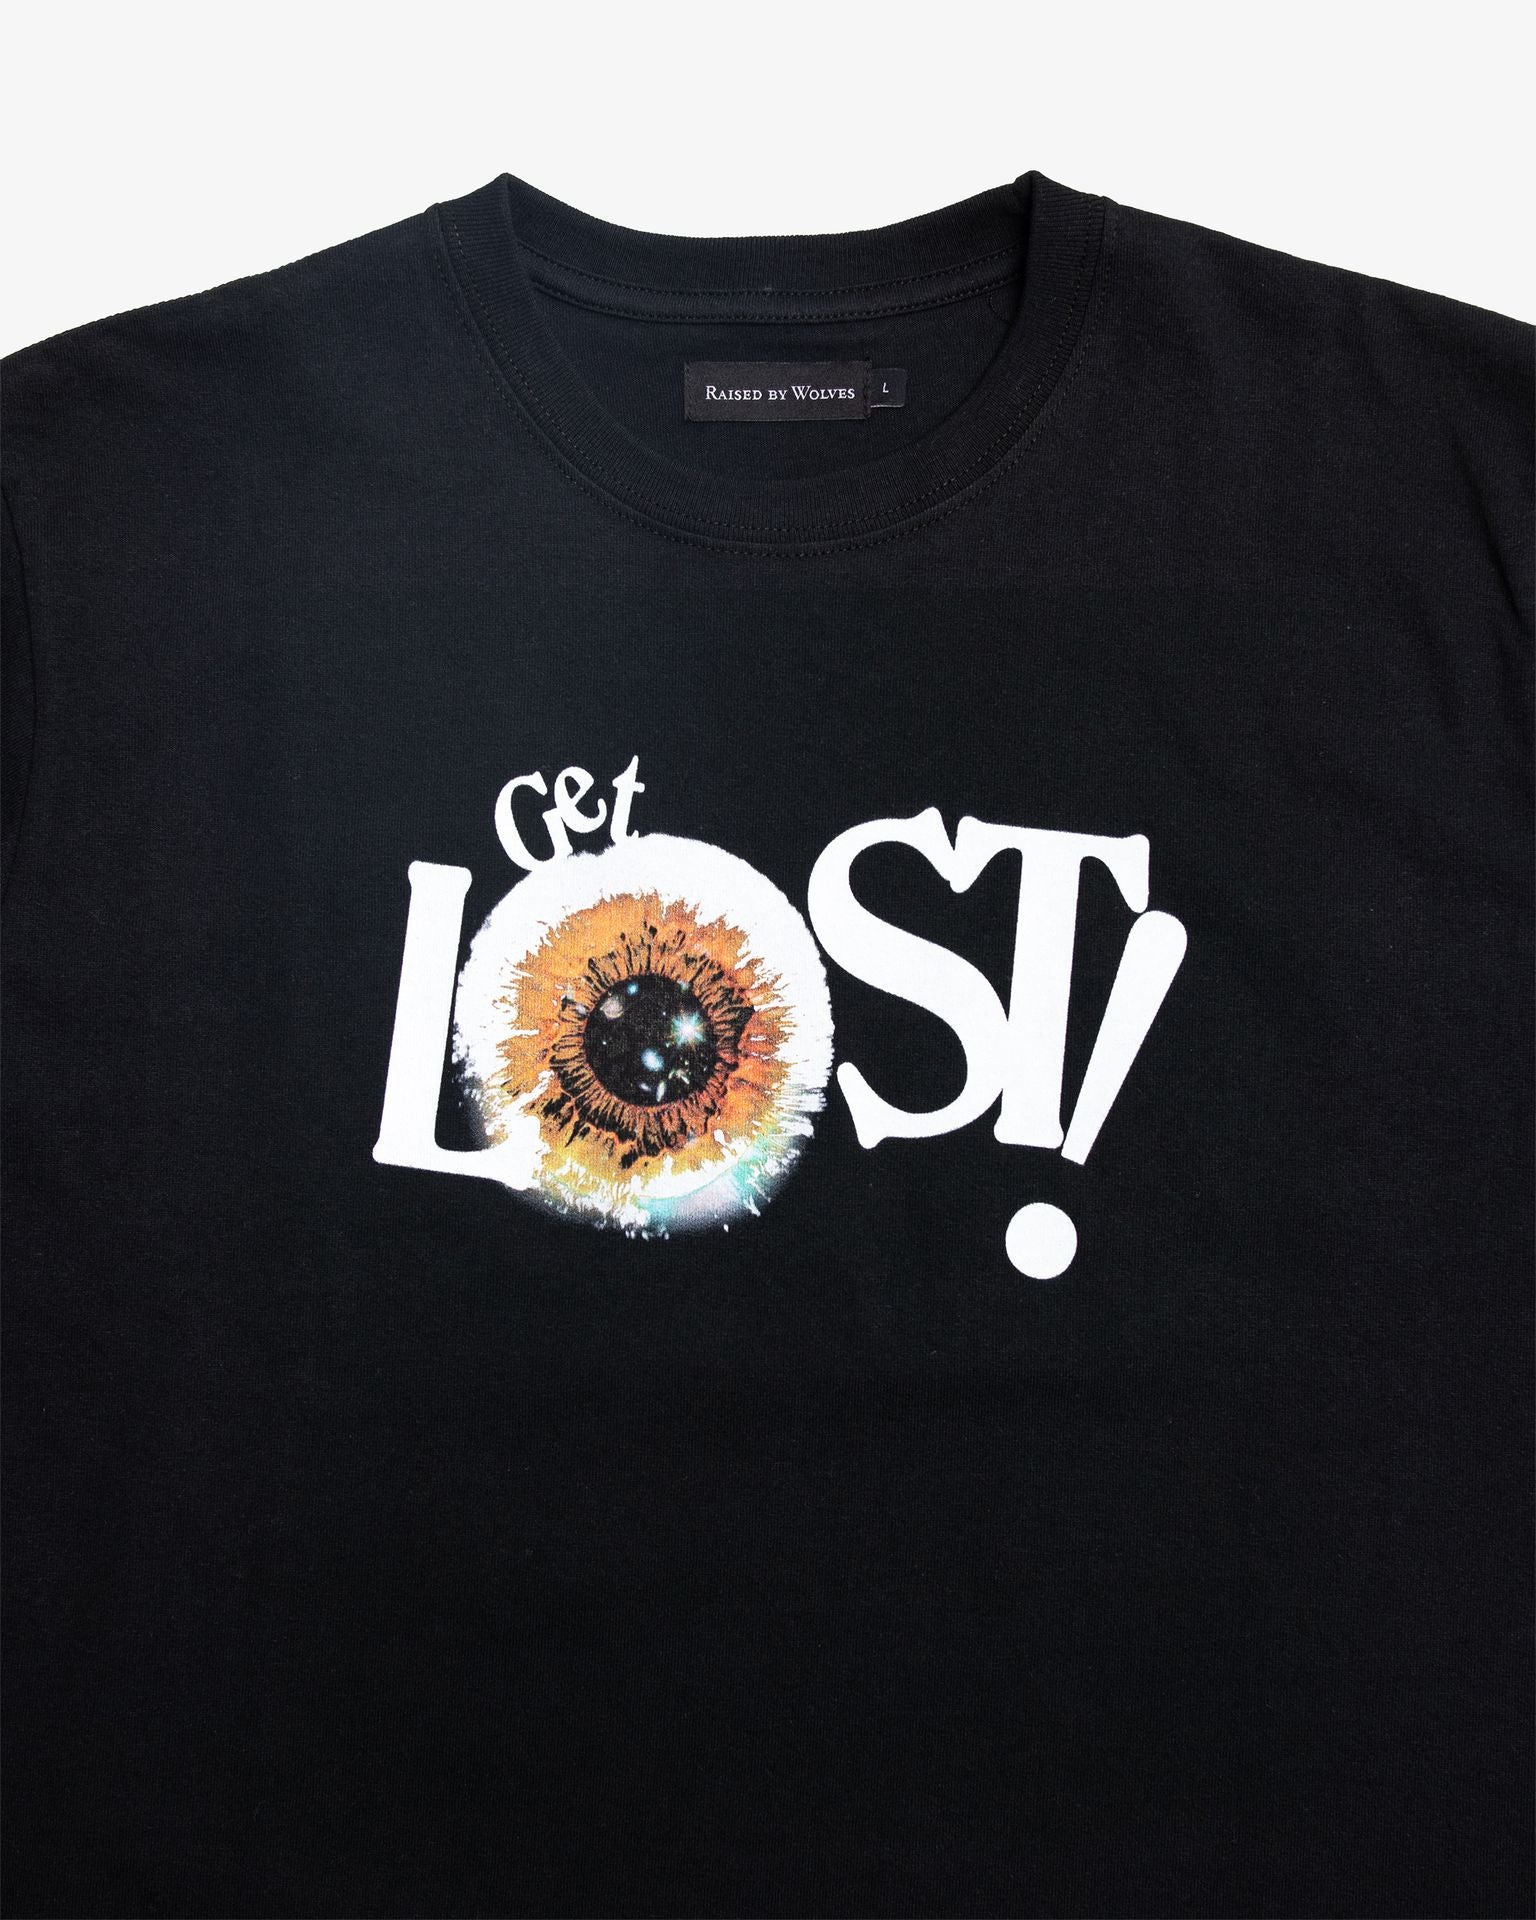 Get Lost! T-Shirt - Black